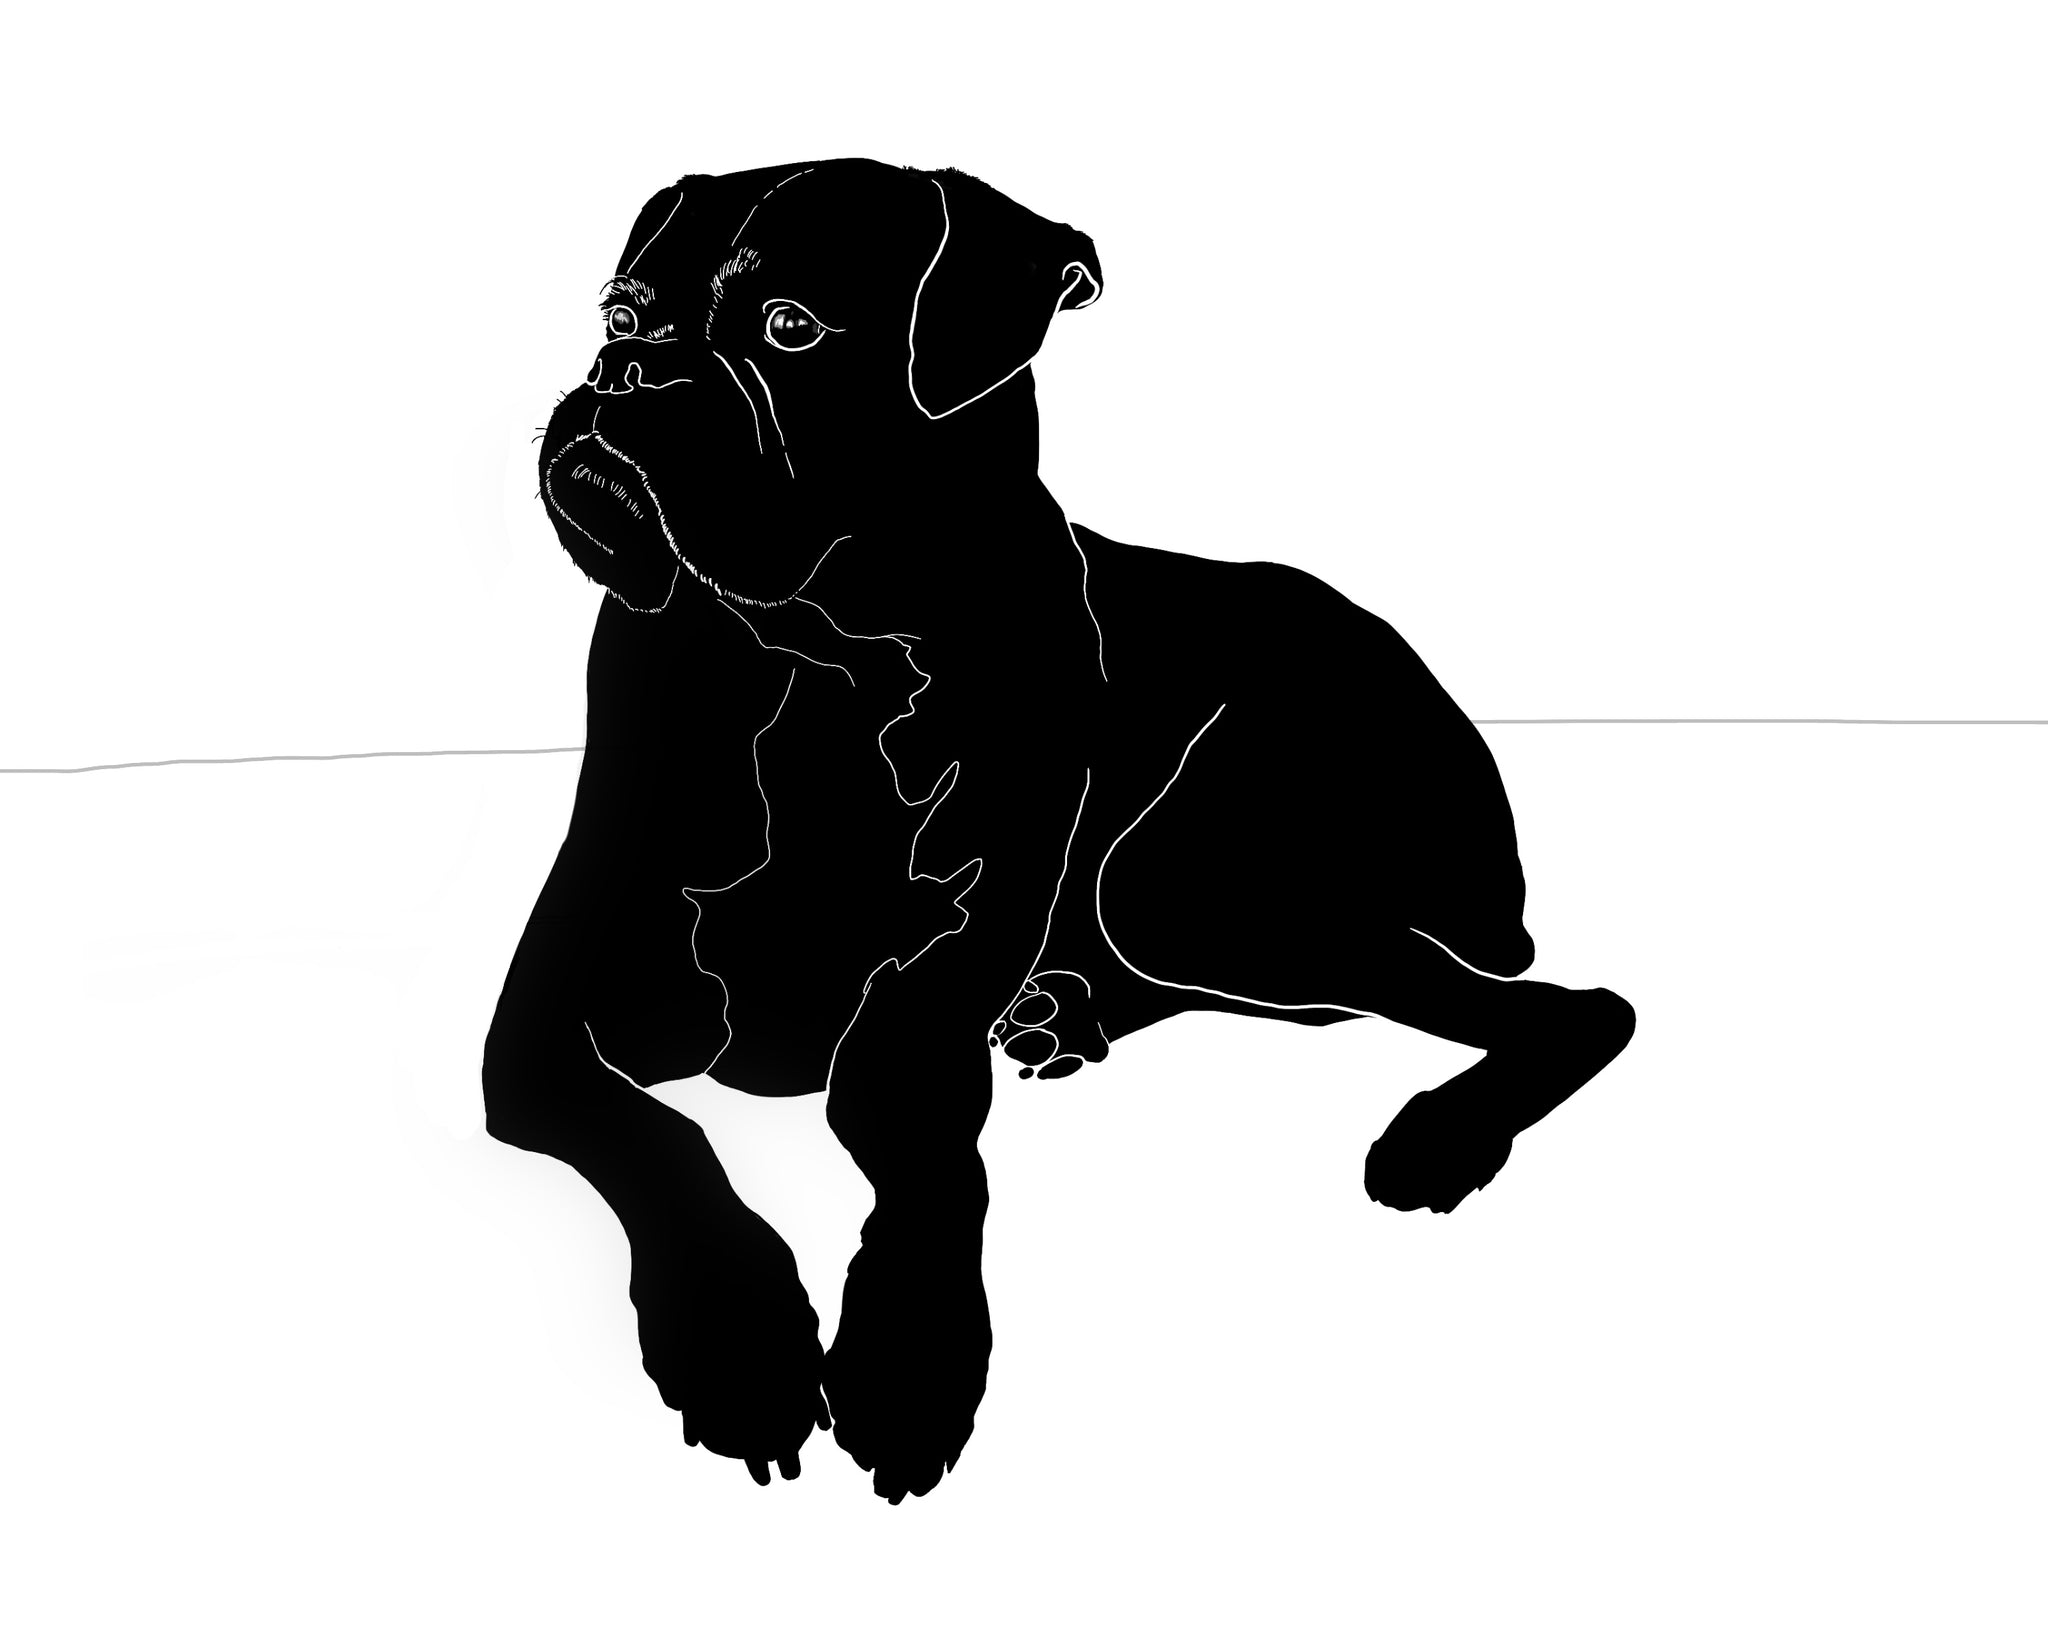 Full body custom silhouette portrait of a fur baby dog